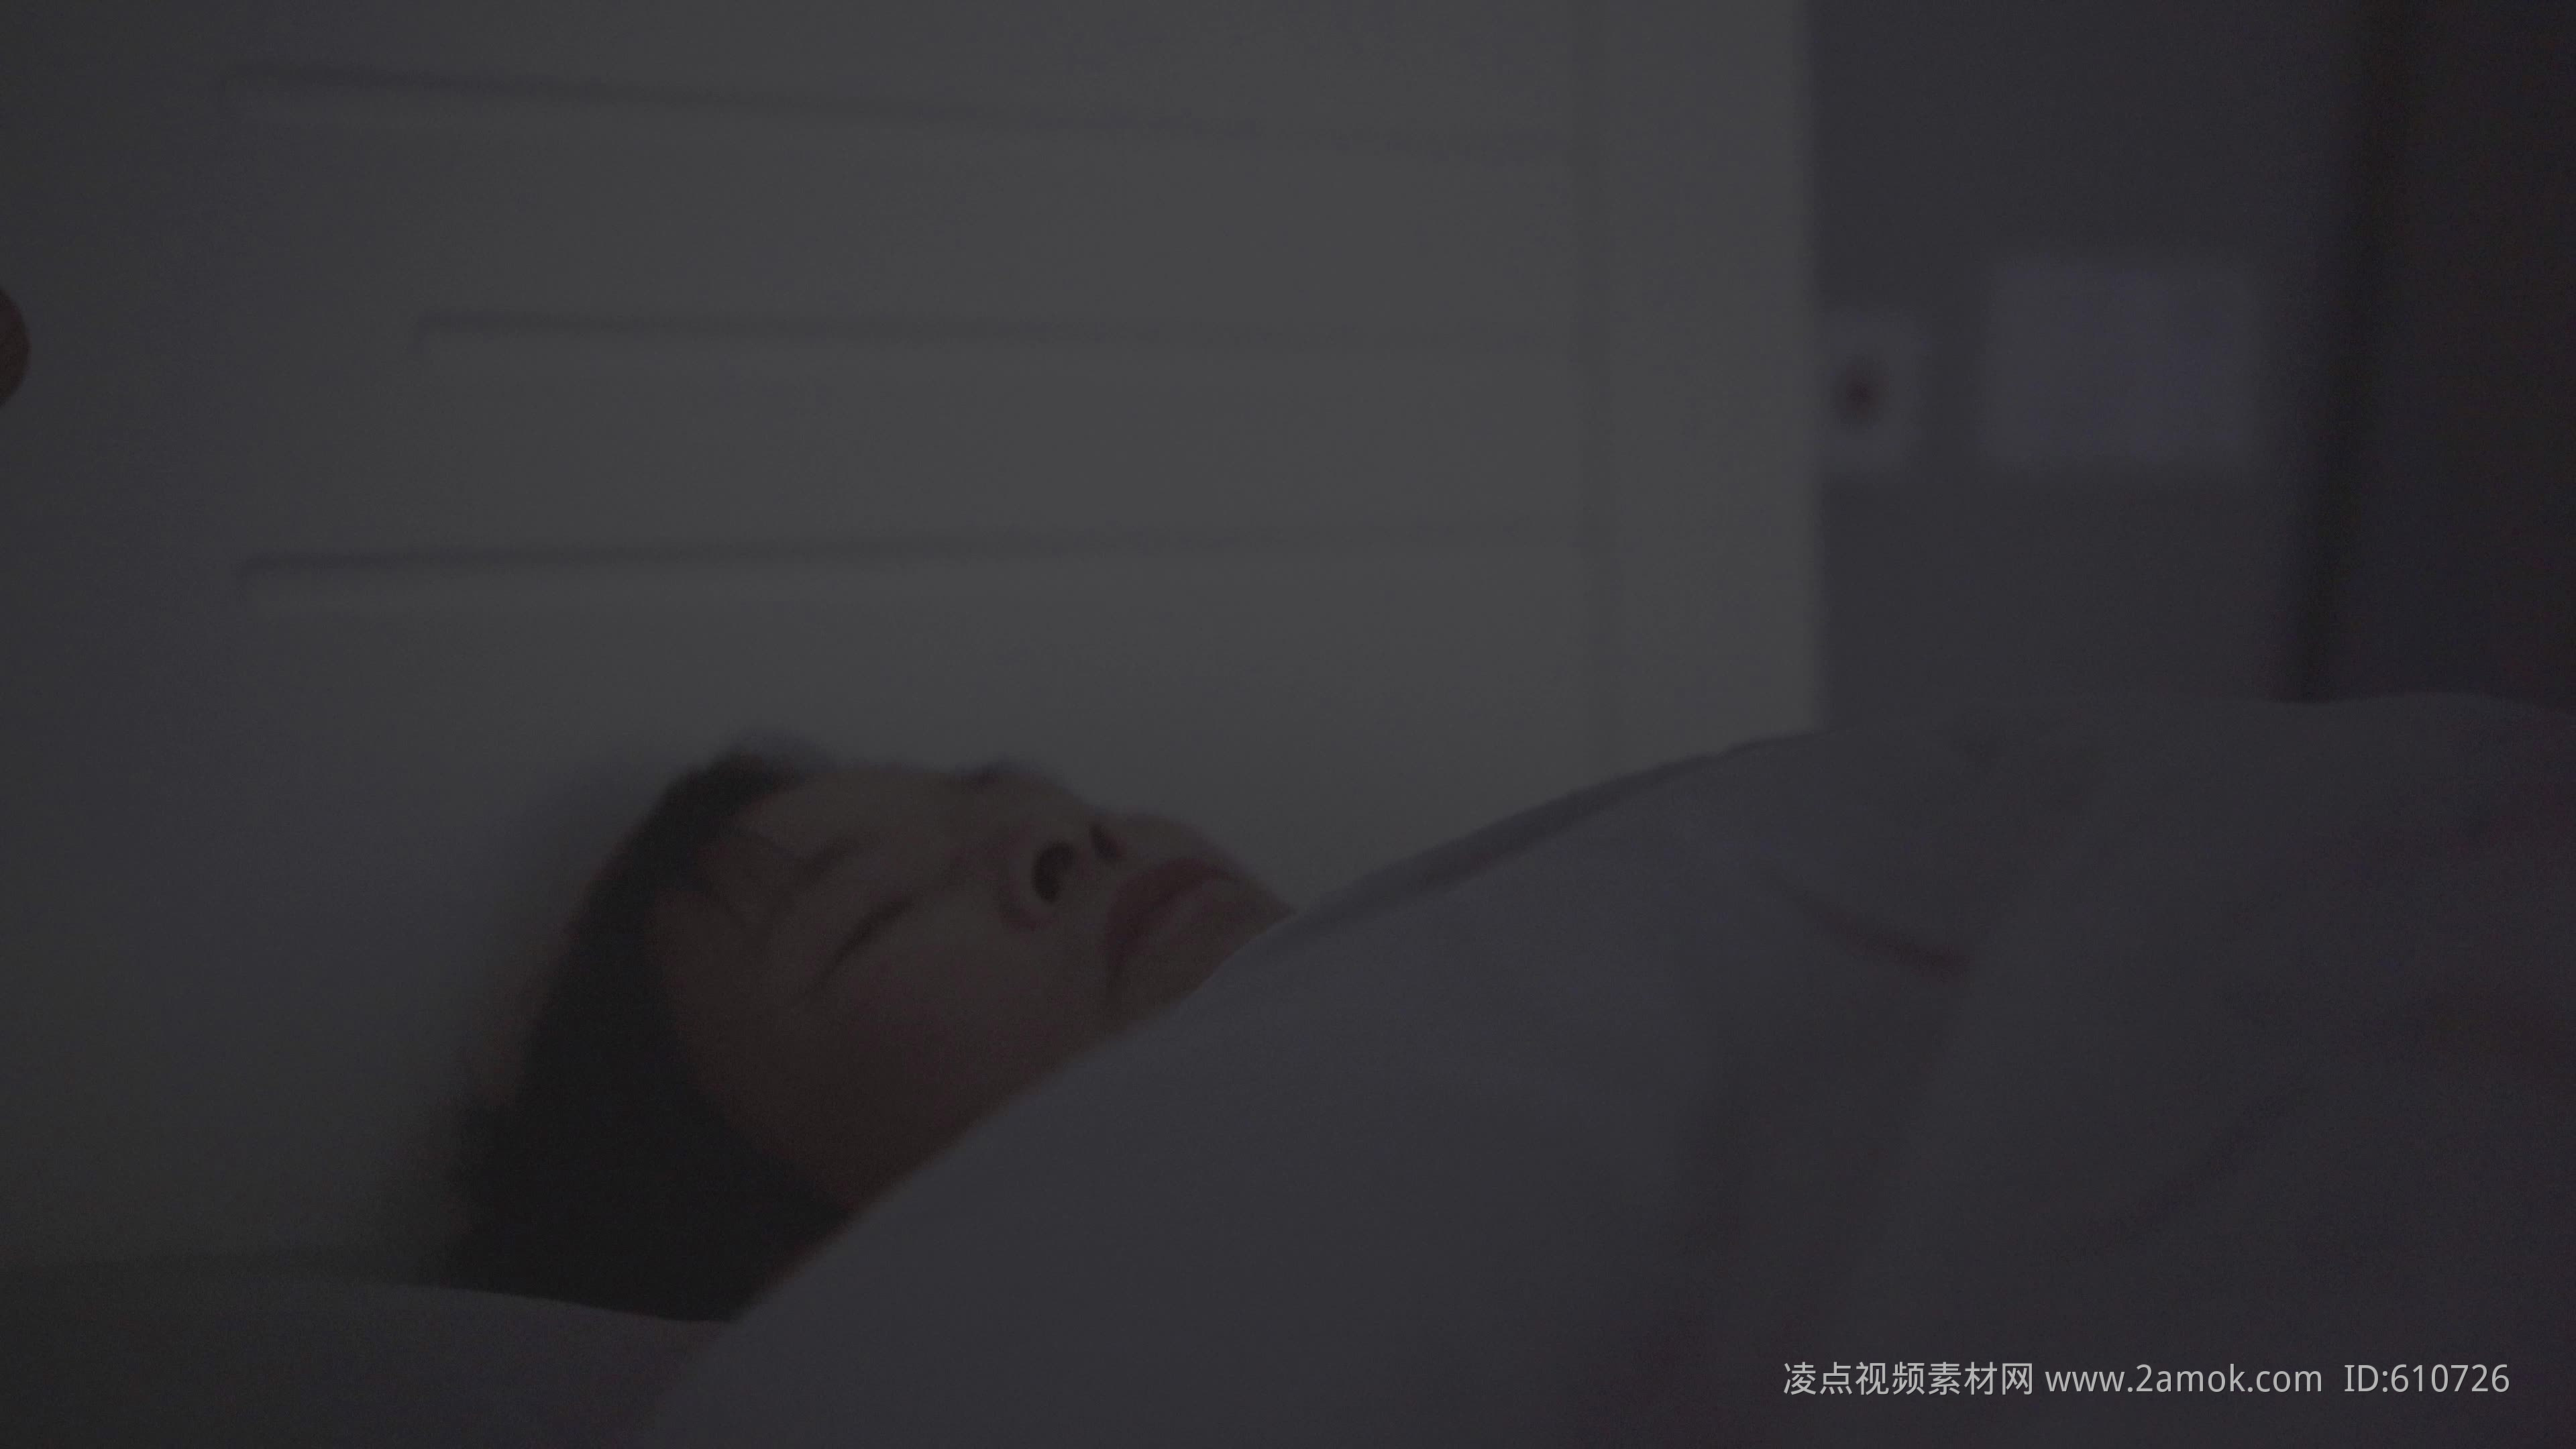 Senior man sleeping on bed stock image. Image of male - 103016525